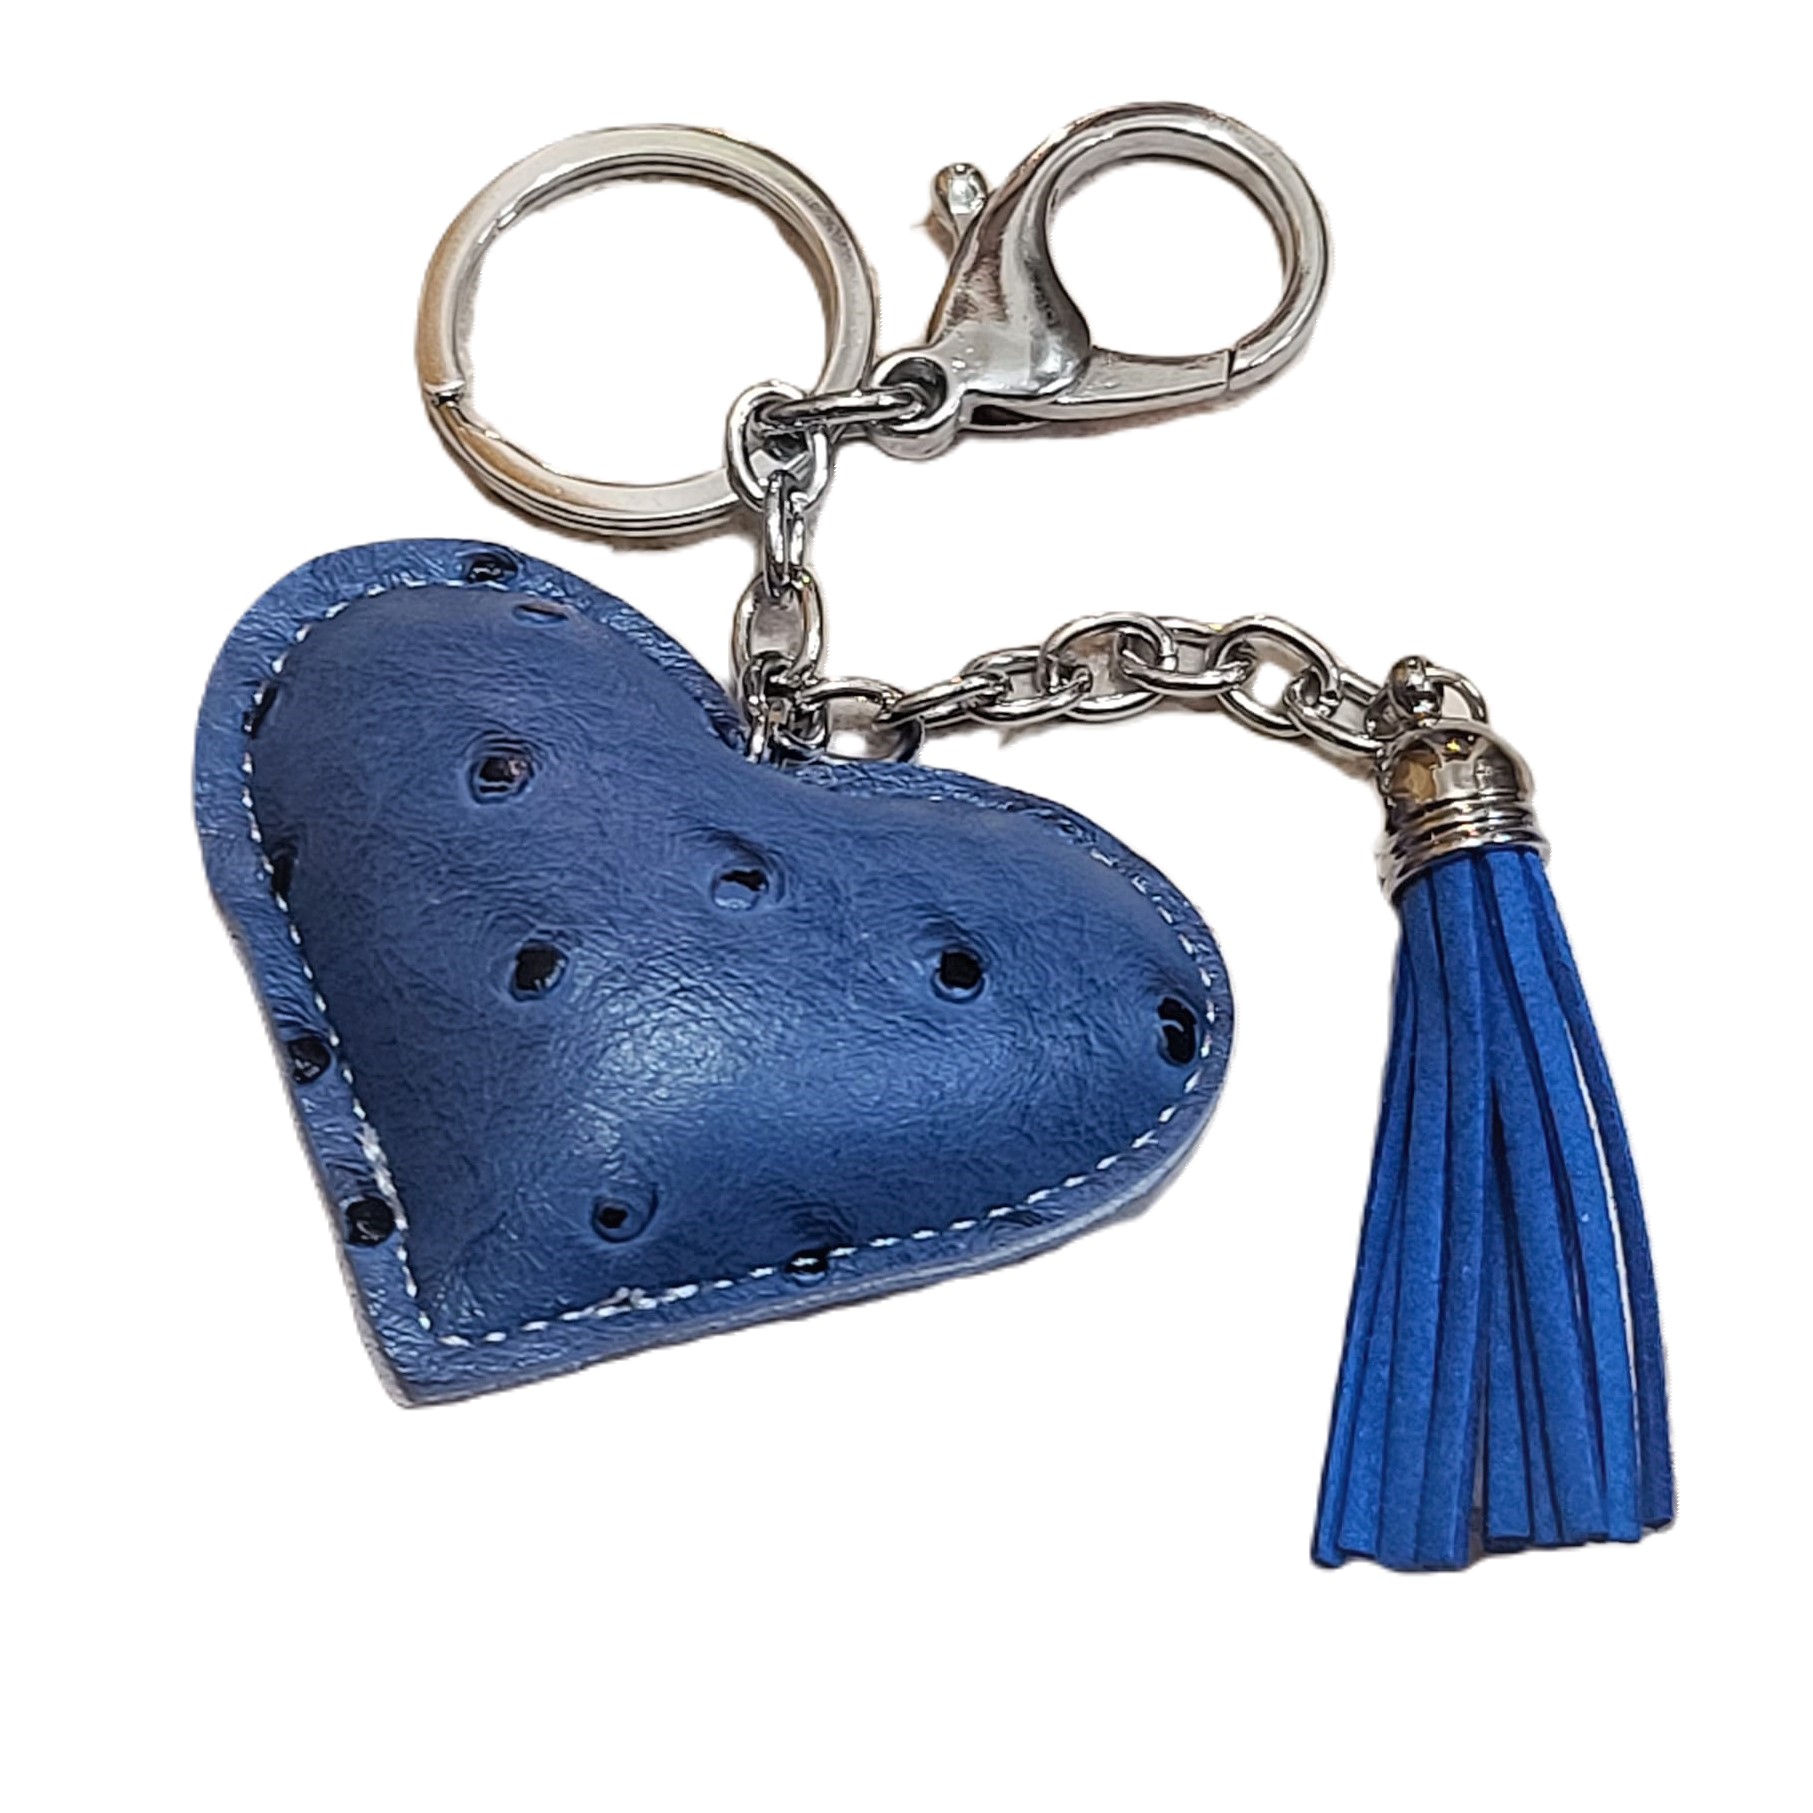 Key Chain - Navy Blue Heart with Tassel